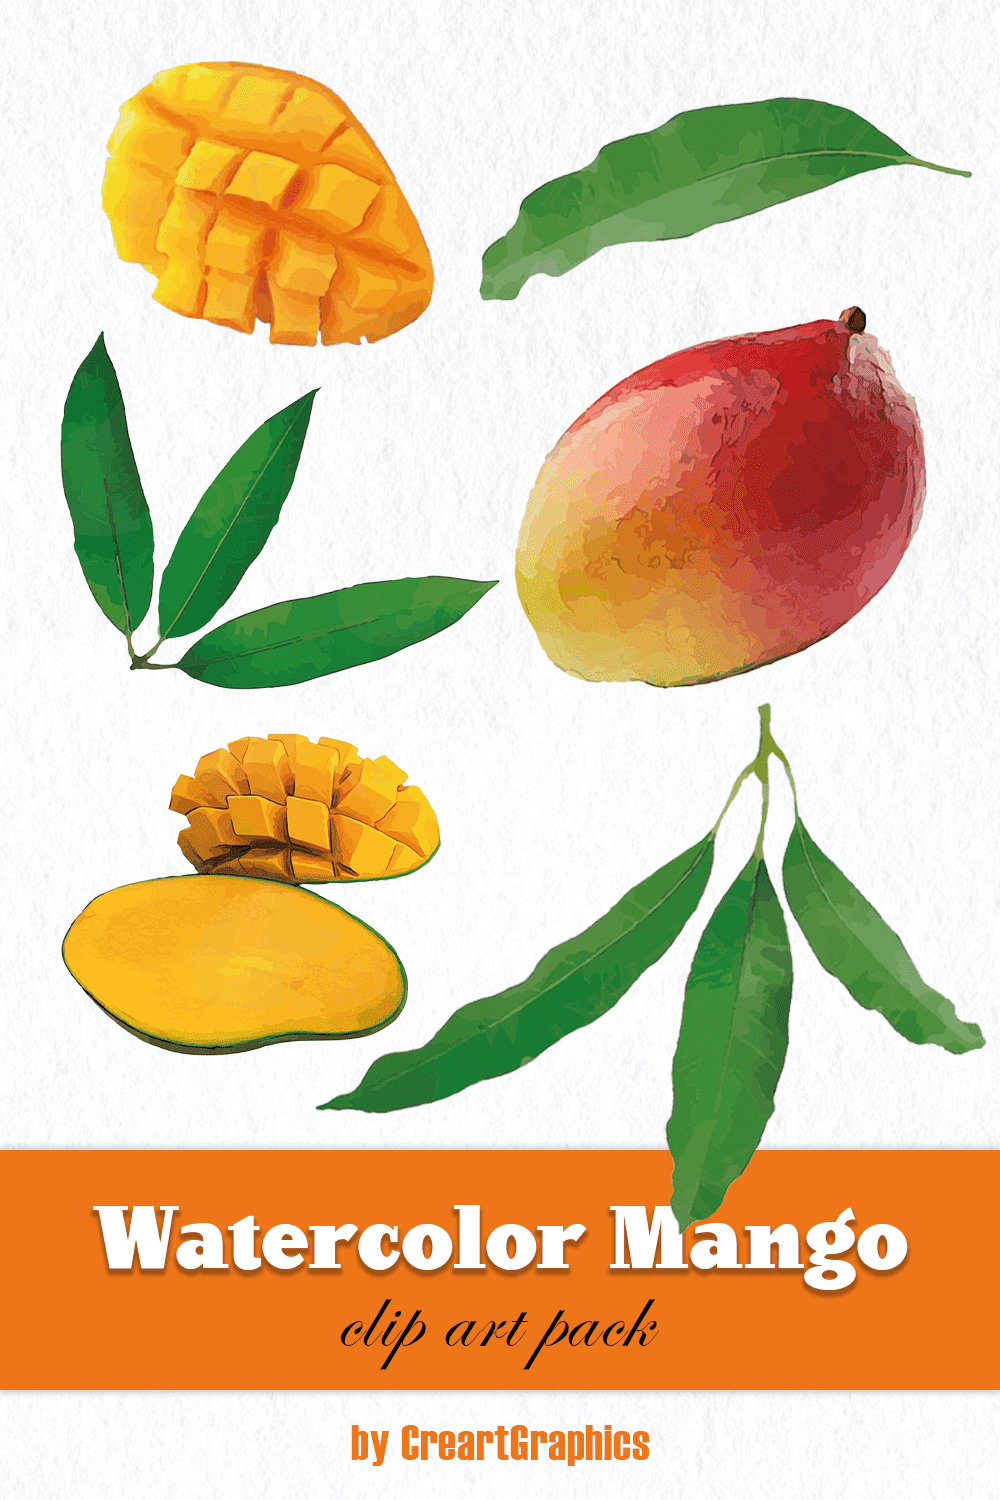 Watercolor mango clip art pack - pinterest image preview.